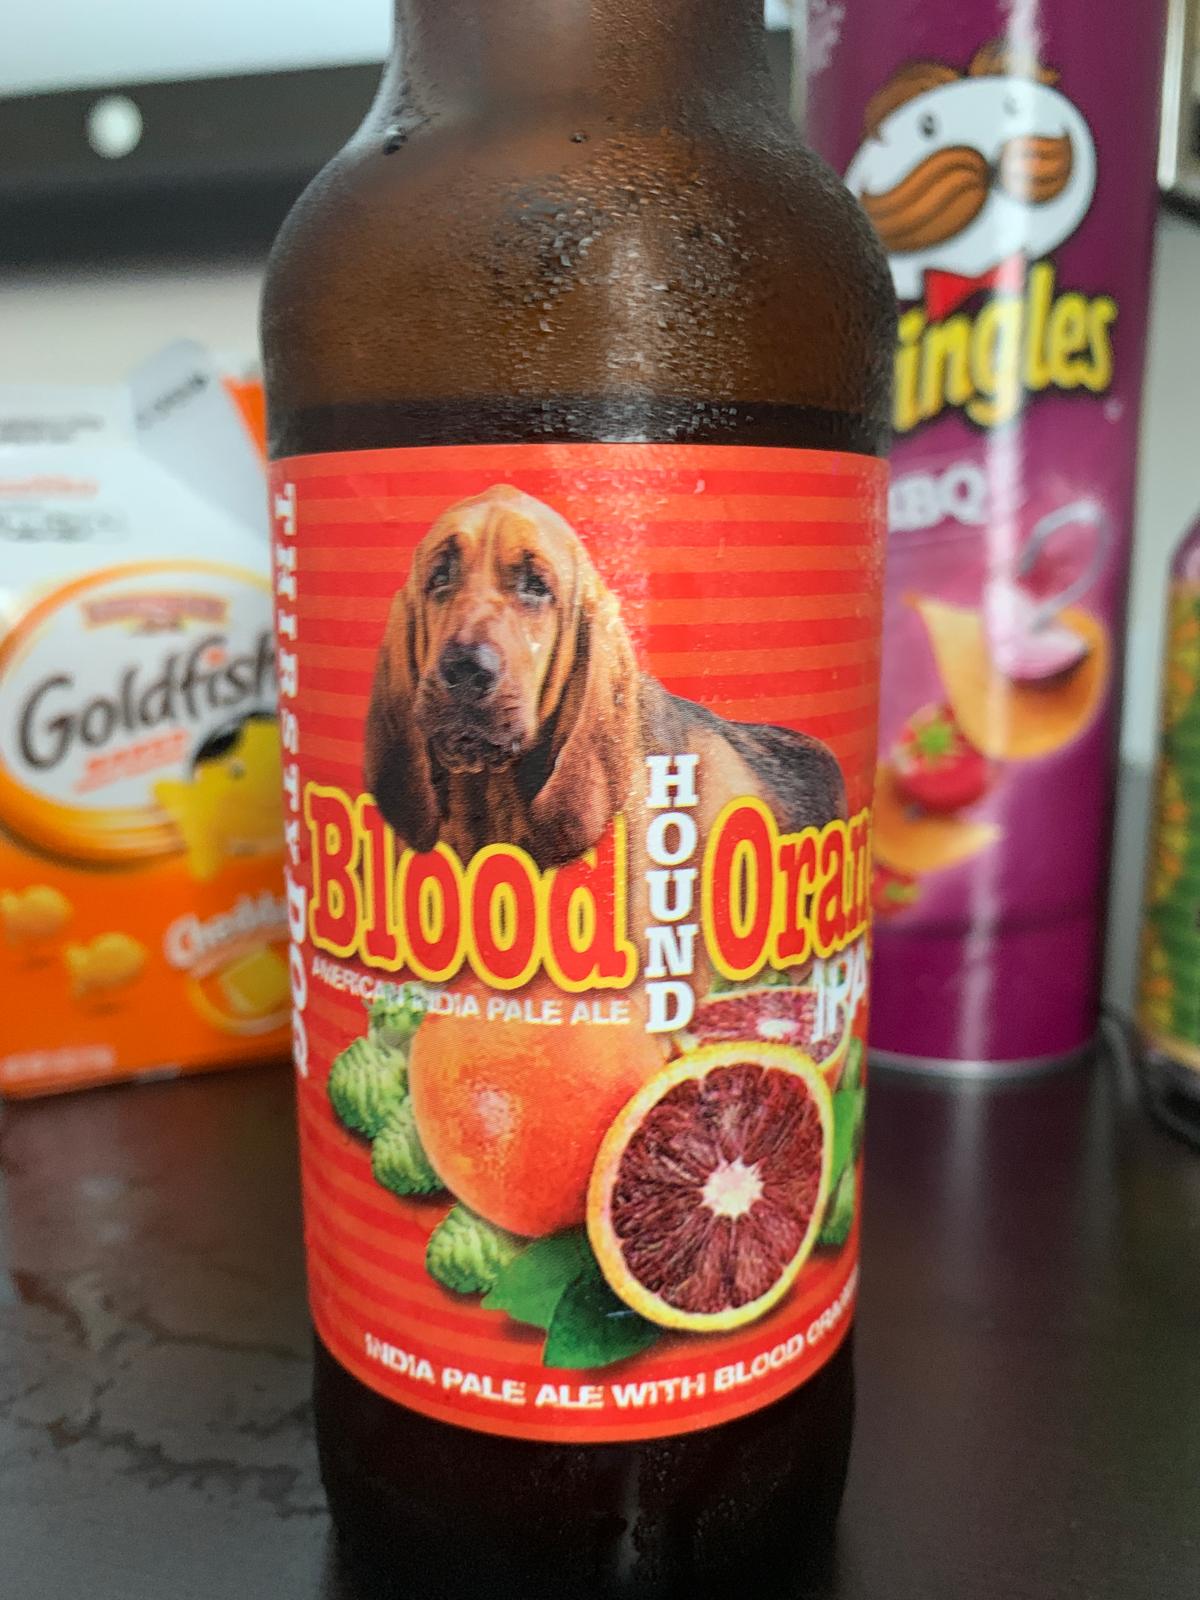 Bloodhound Orange IPA